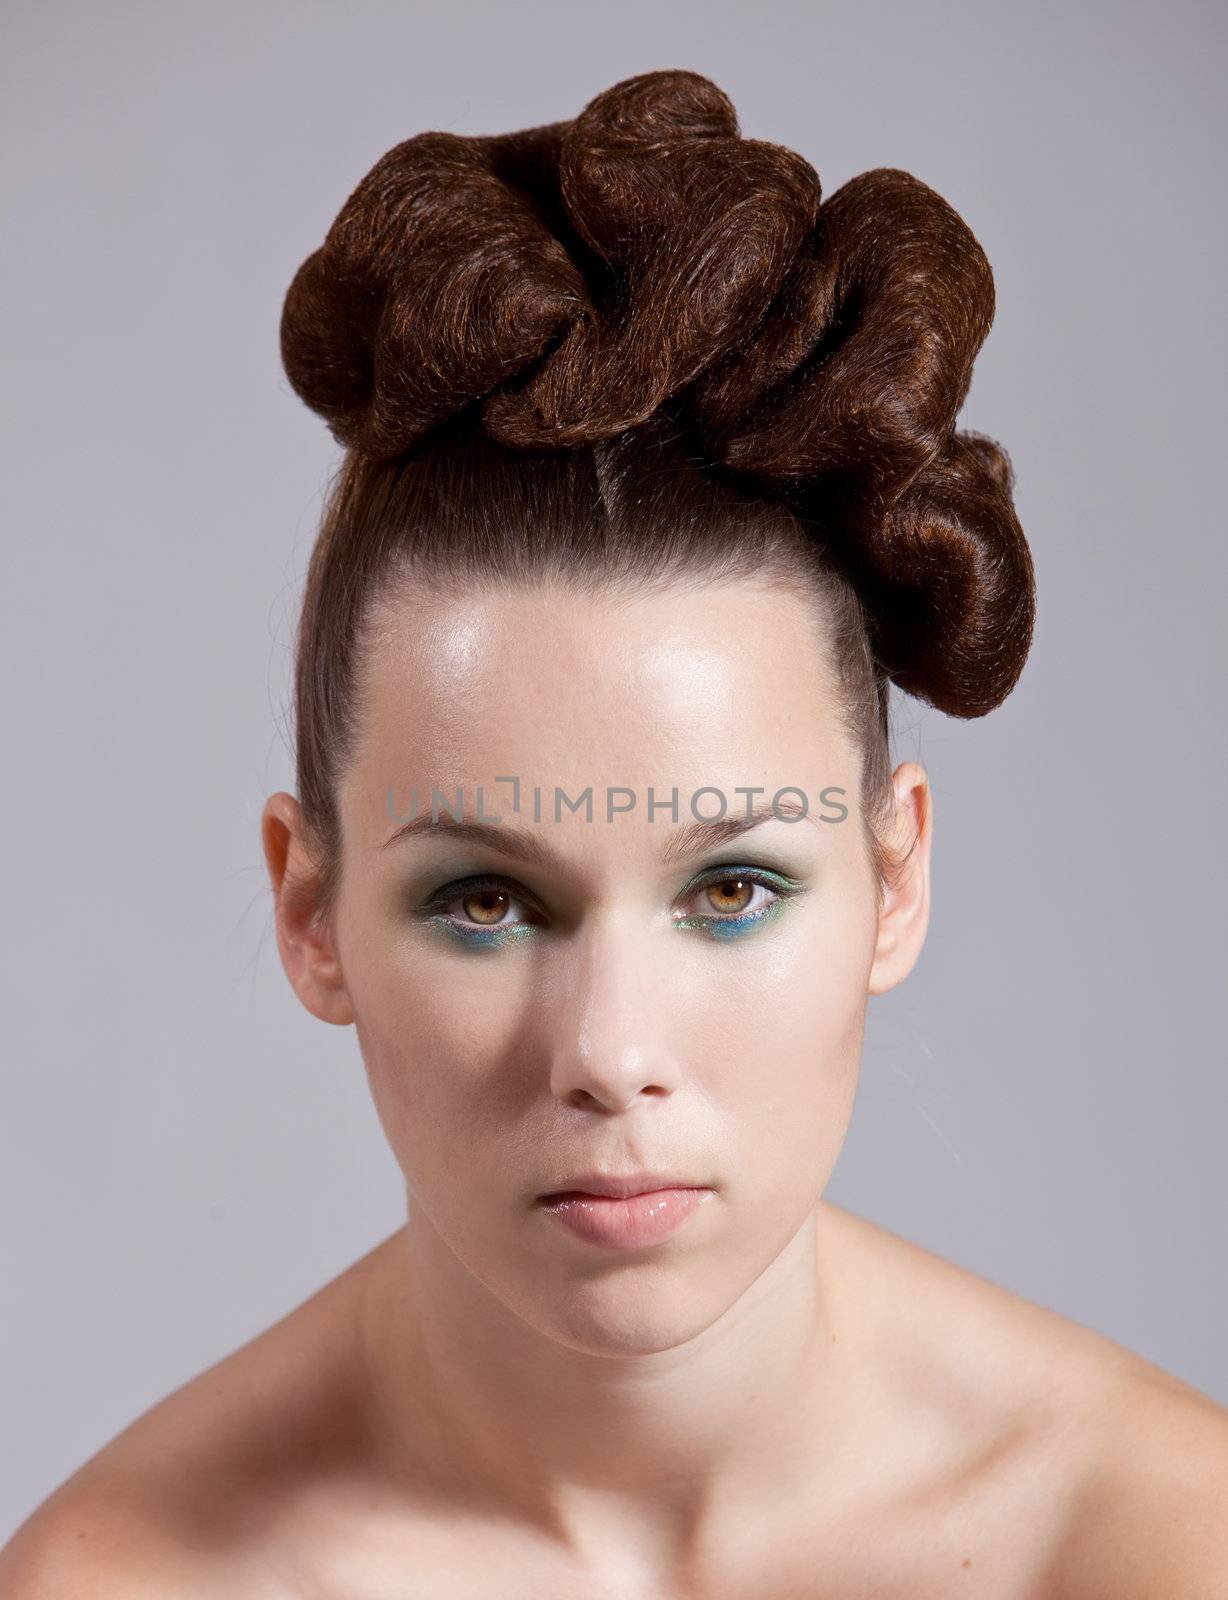 Elaborate hairstyle by Fotosmurf